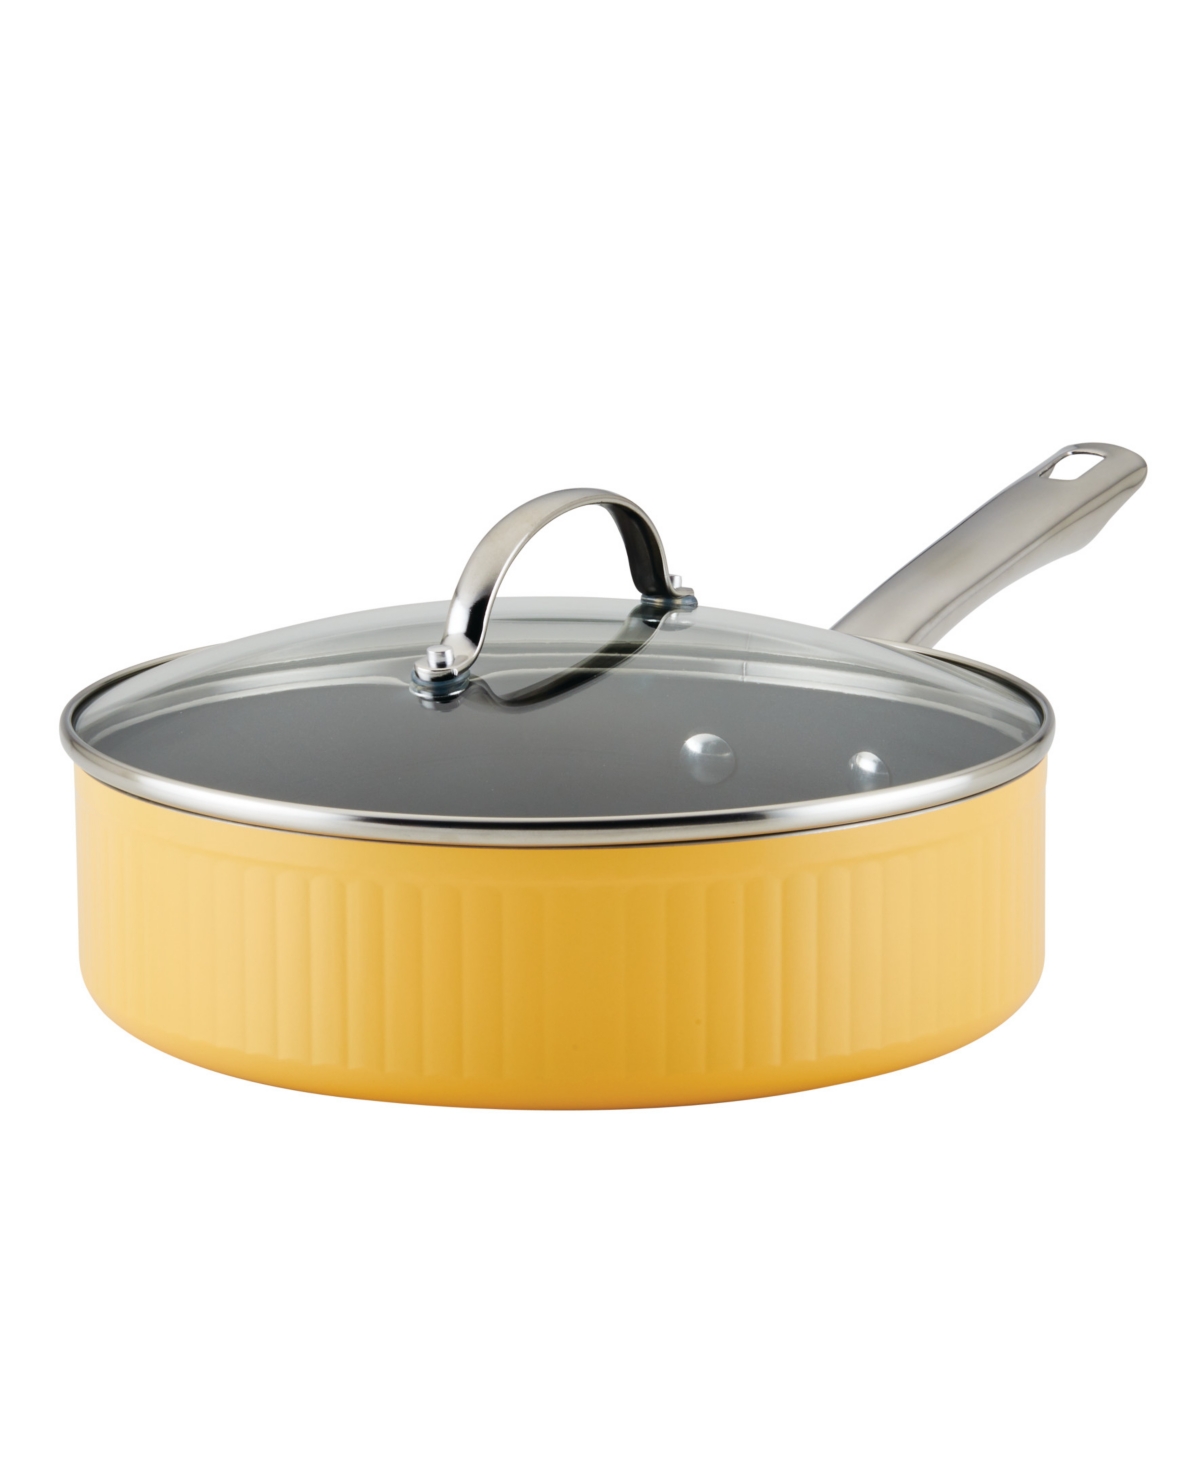 Farberware Style Aluminum Nonstick 3 Quart Cookware Saute Pan With Lid In Yellow